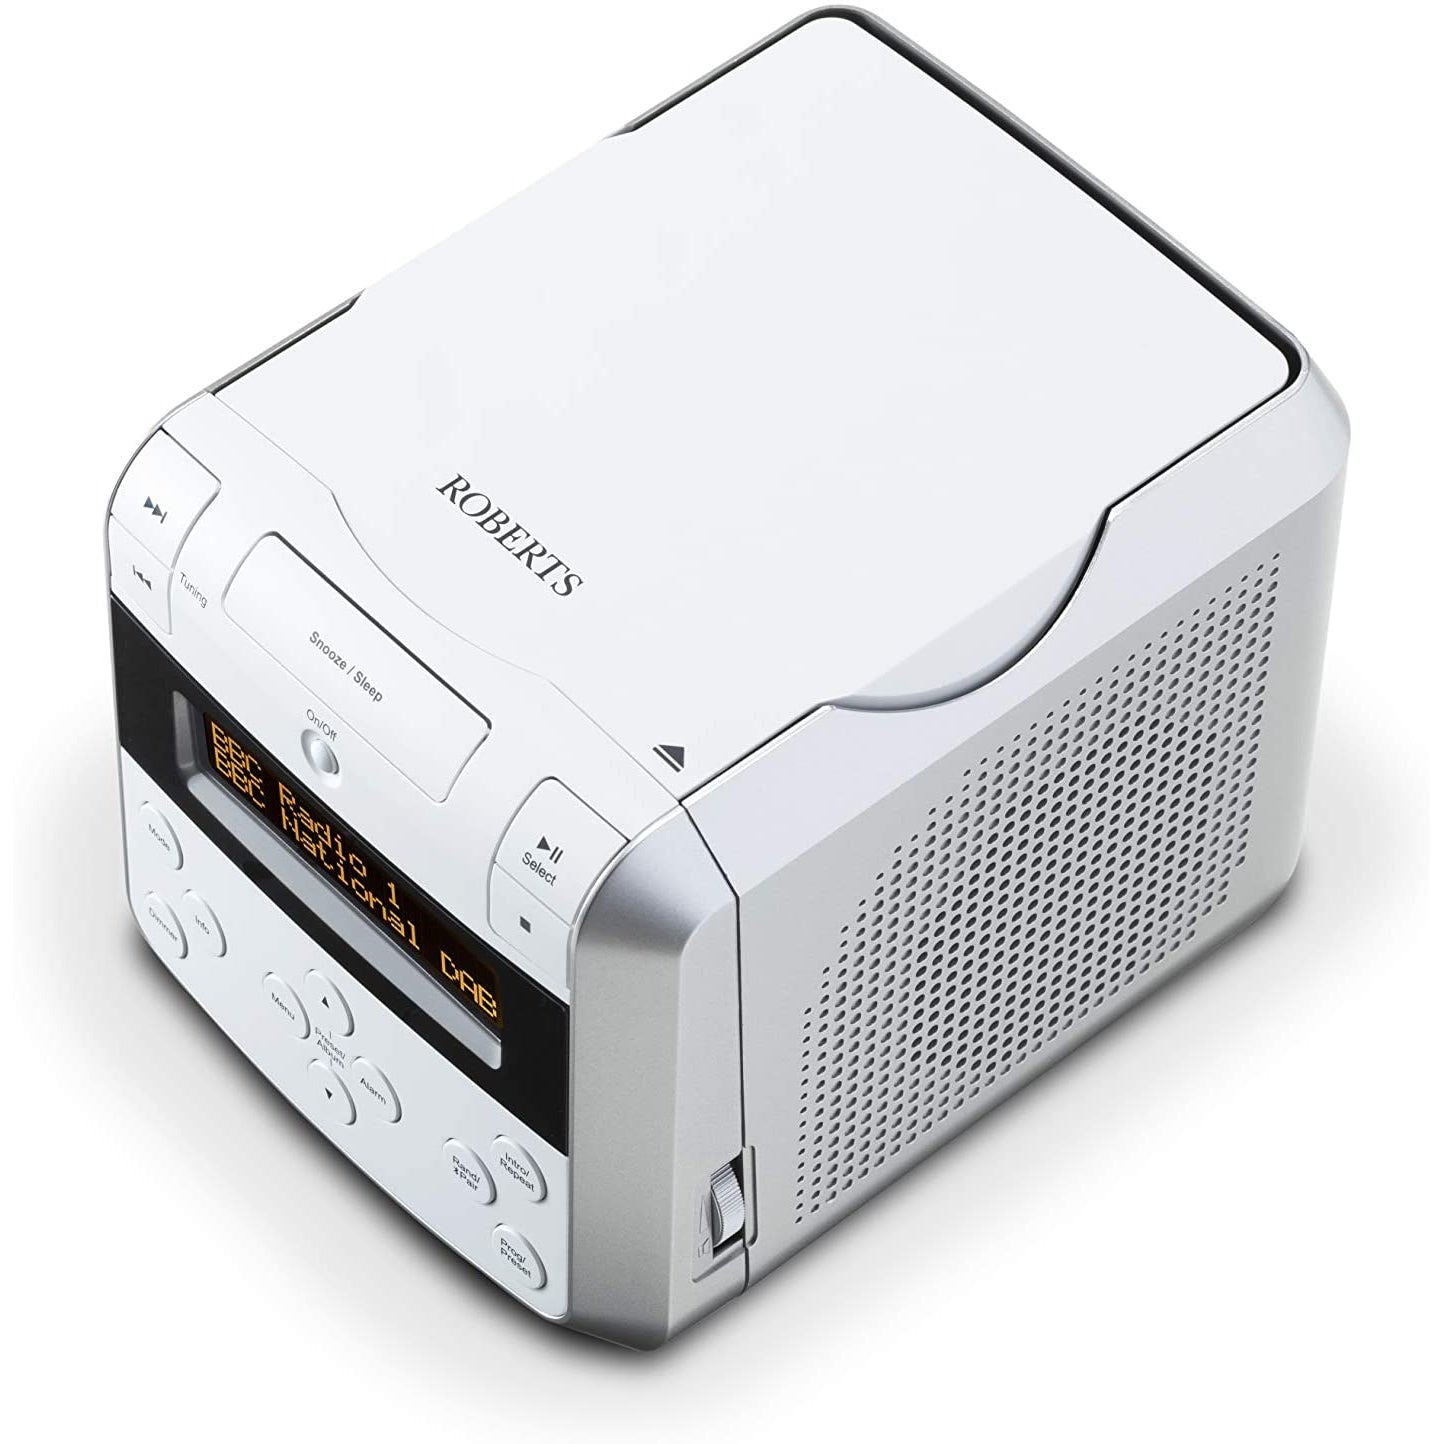 Roberts Sound48 DAB+ Bluetooth Radio - White - Refurbished Excellent